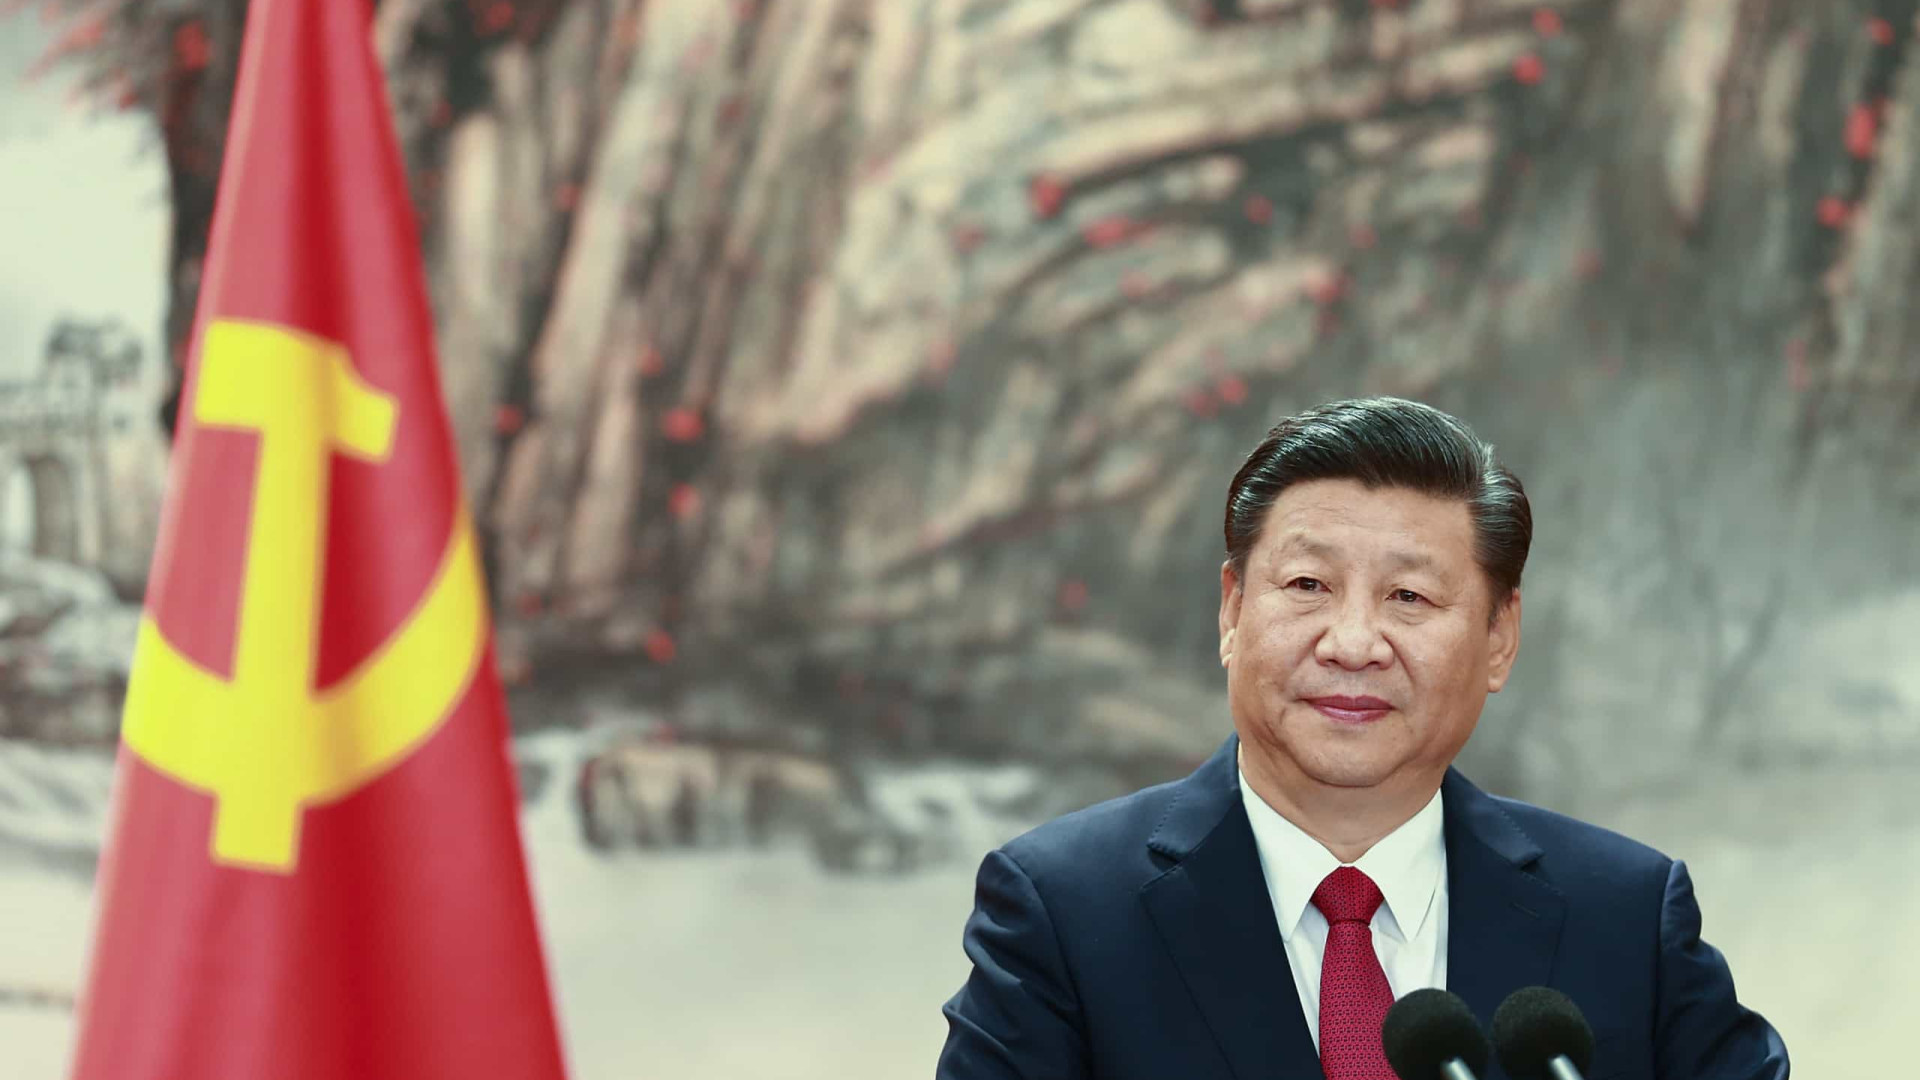 Xi Jinping ataca Guerra Fria 2.0 e defende multilateralismo em Davos